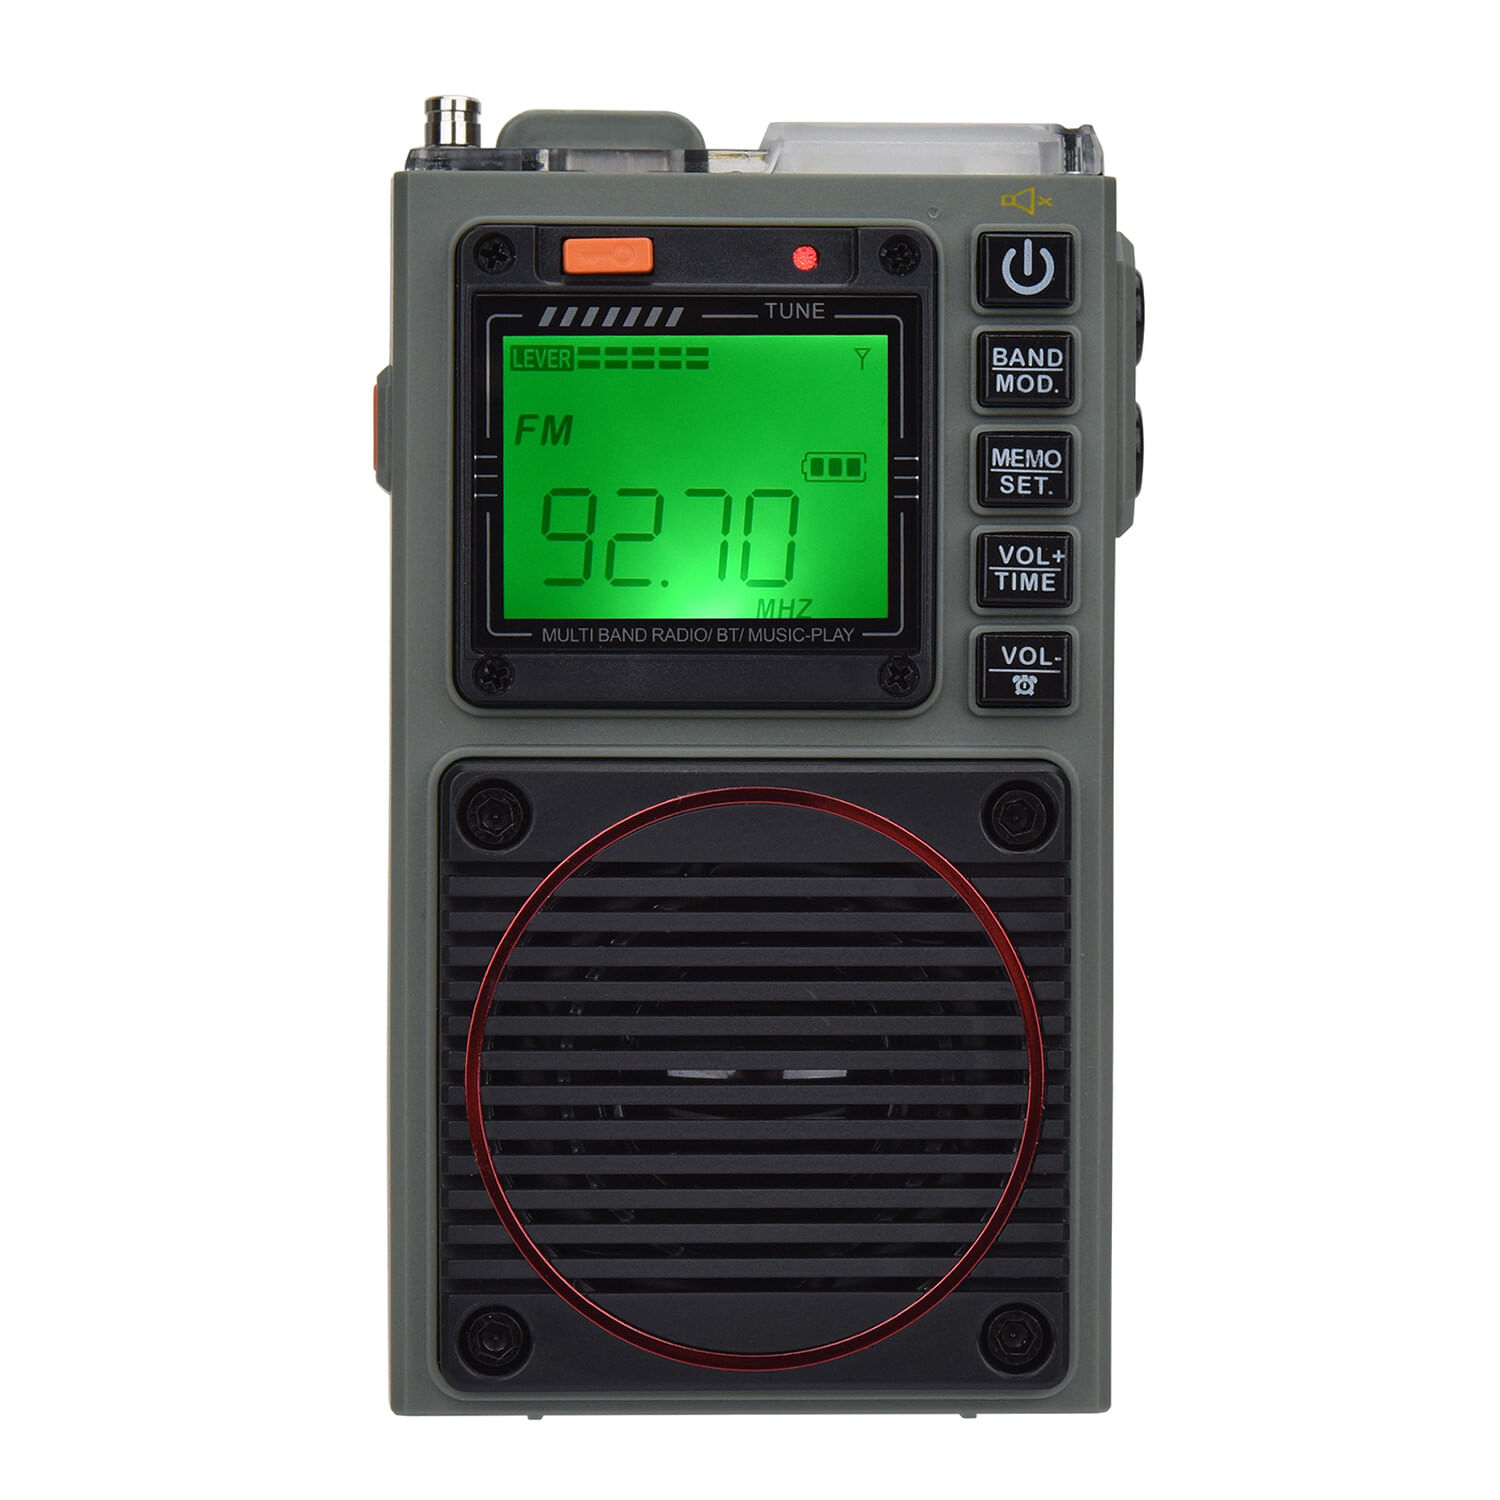 Radio Fm Altavoz Estéreo Portátil Digital Reproductor De Audio Mp3